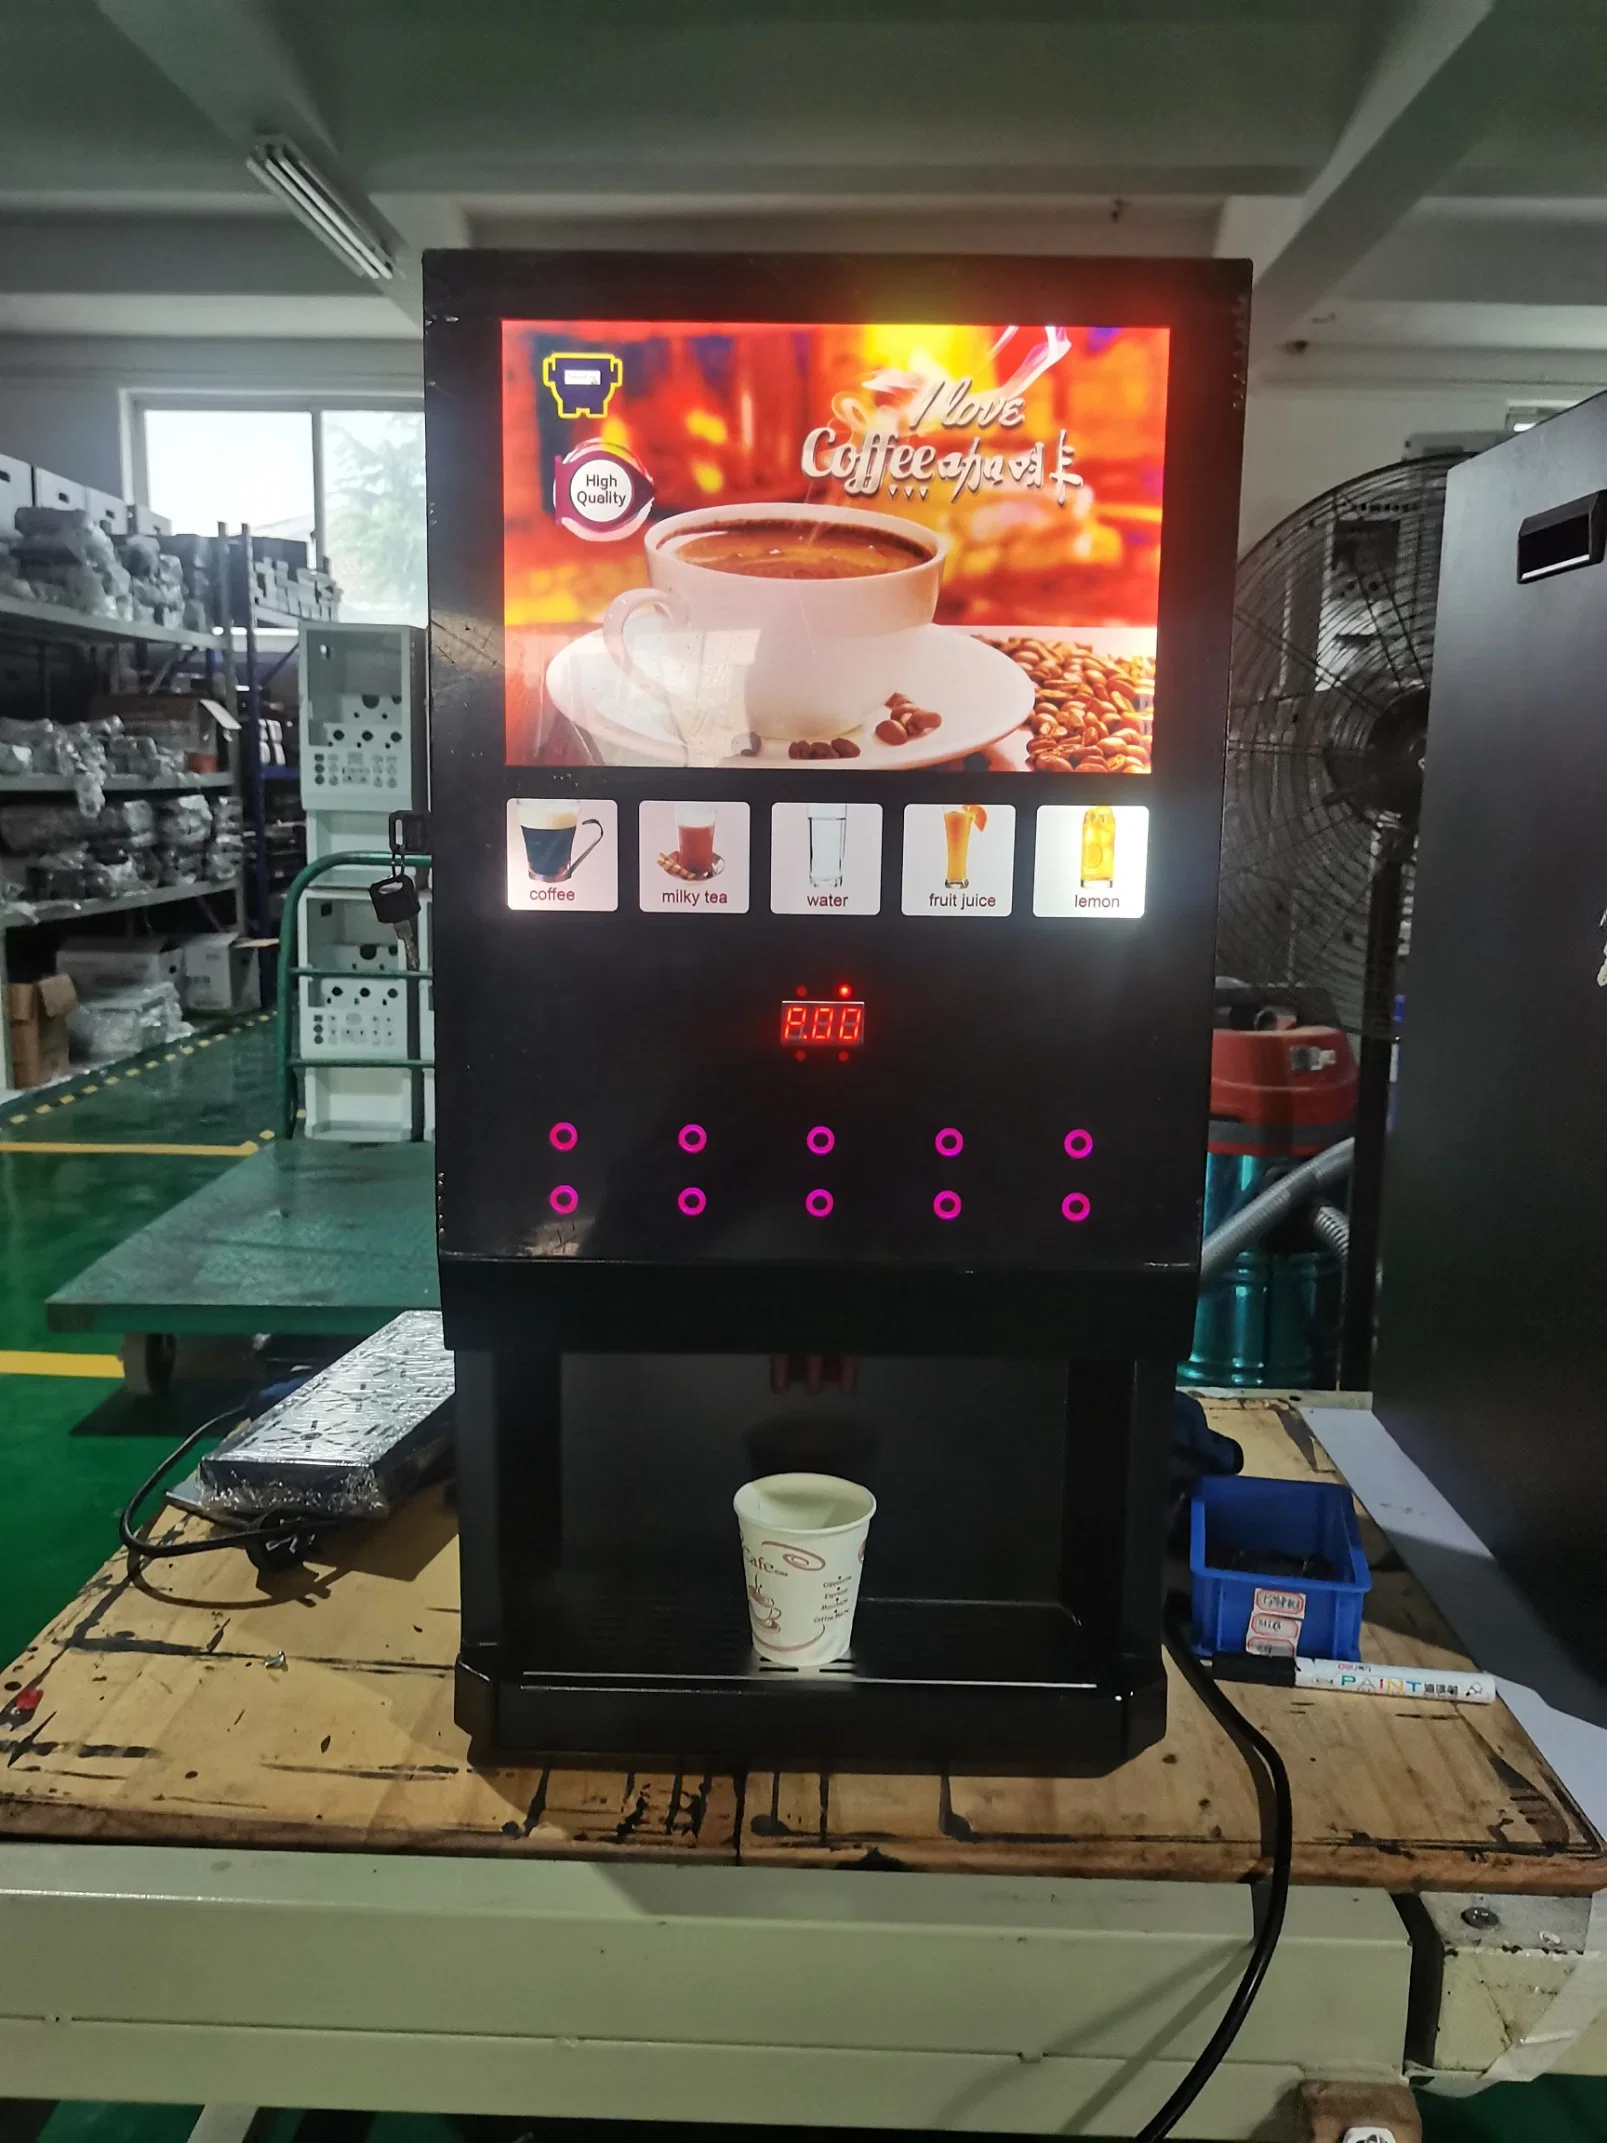 10 Drinks Automatic Coffee Vending Machine for Sale Wf1-404b